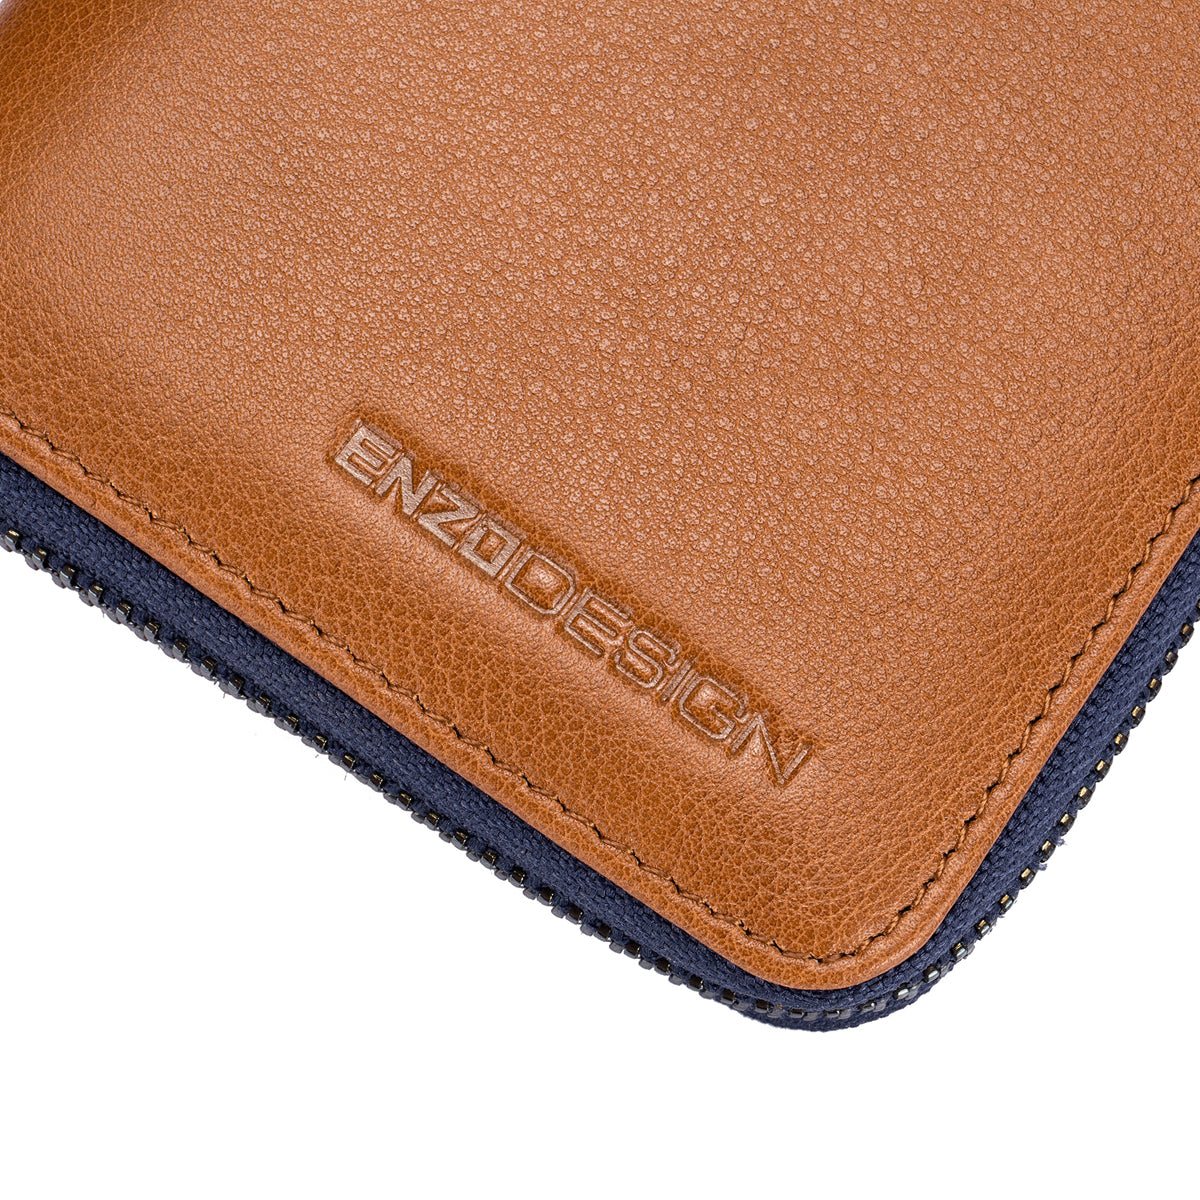 Tan Leather Zip Around Wallet